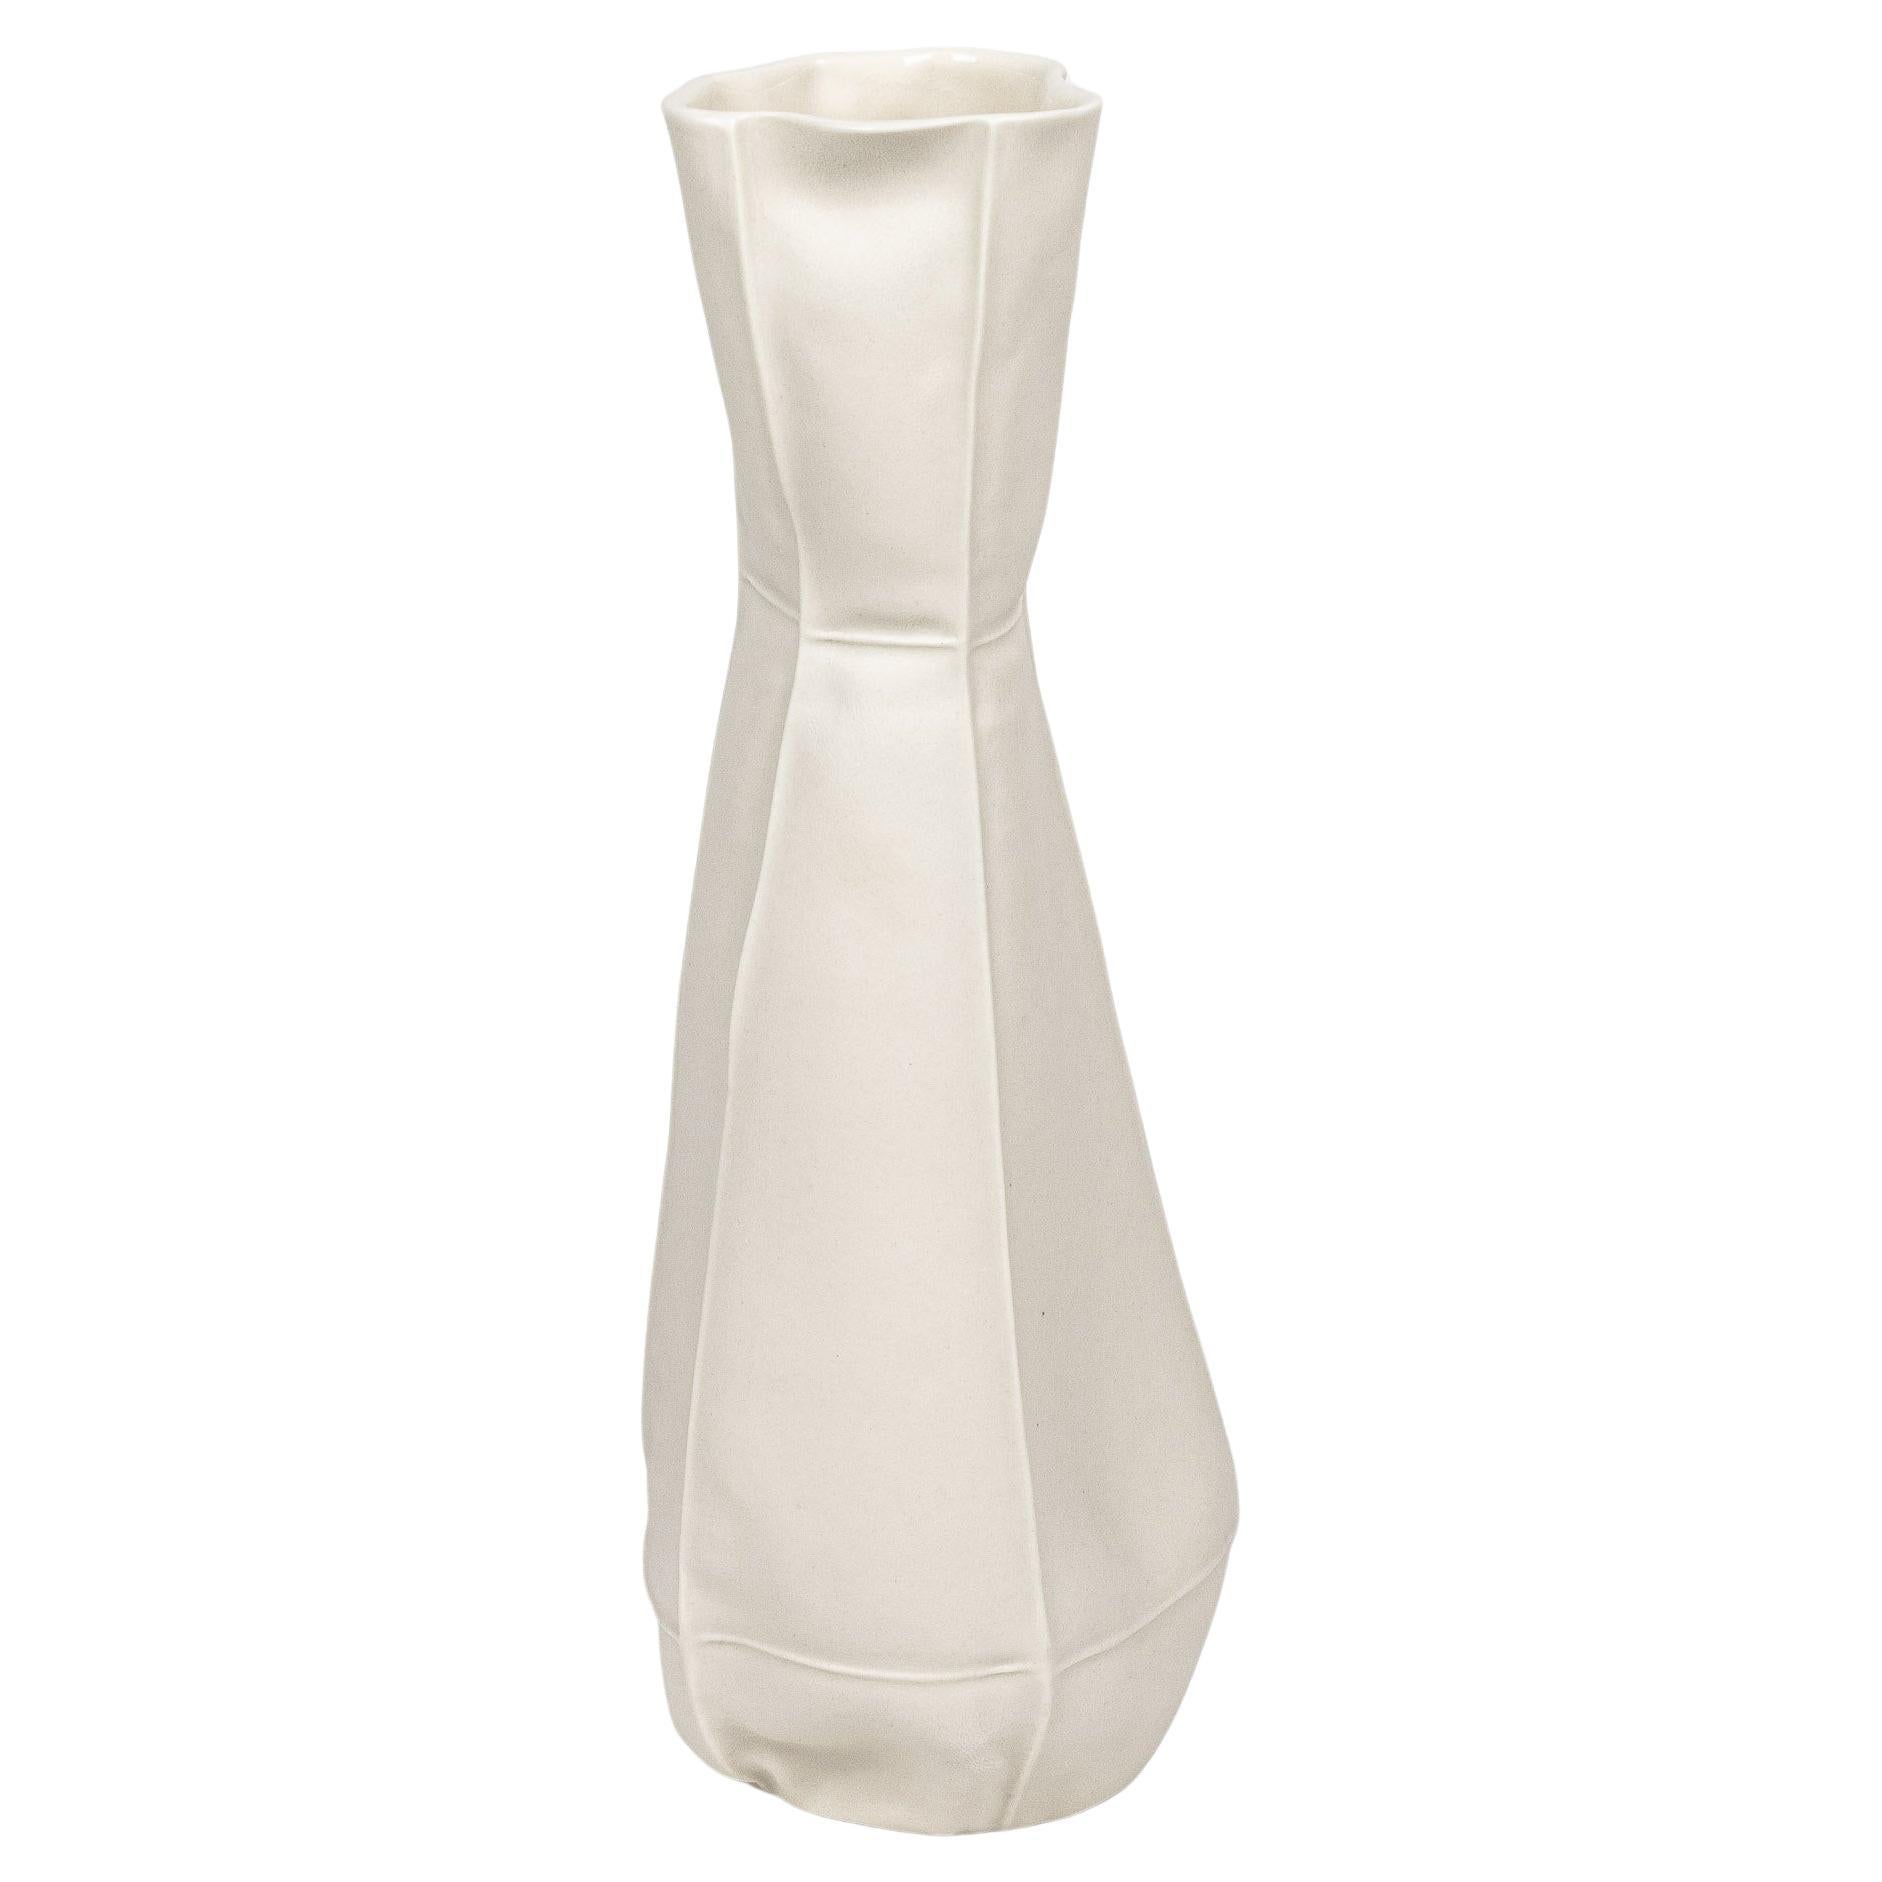 In Stock, White Ceramic Kawa Vase #13, Organic Porcelain Flower Vase